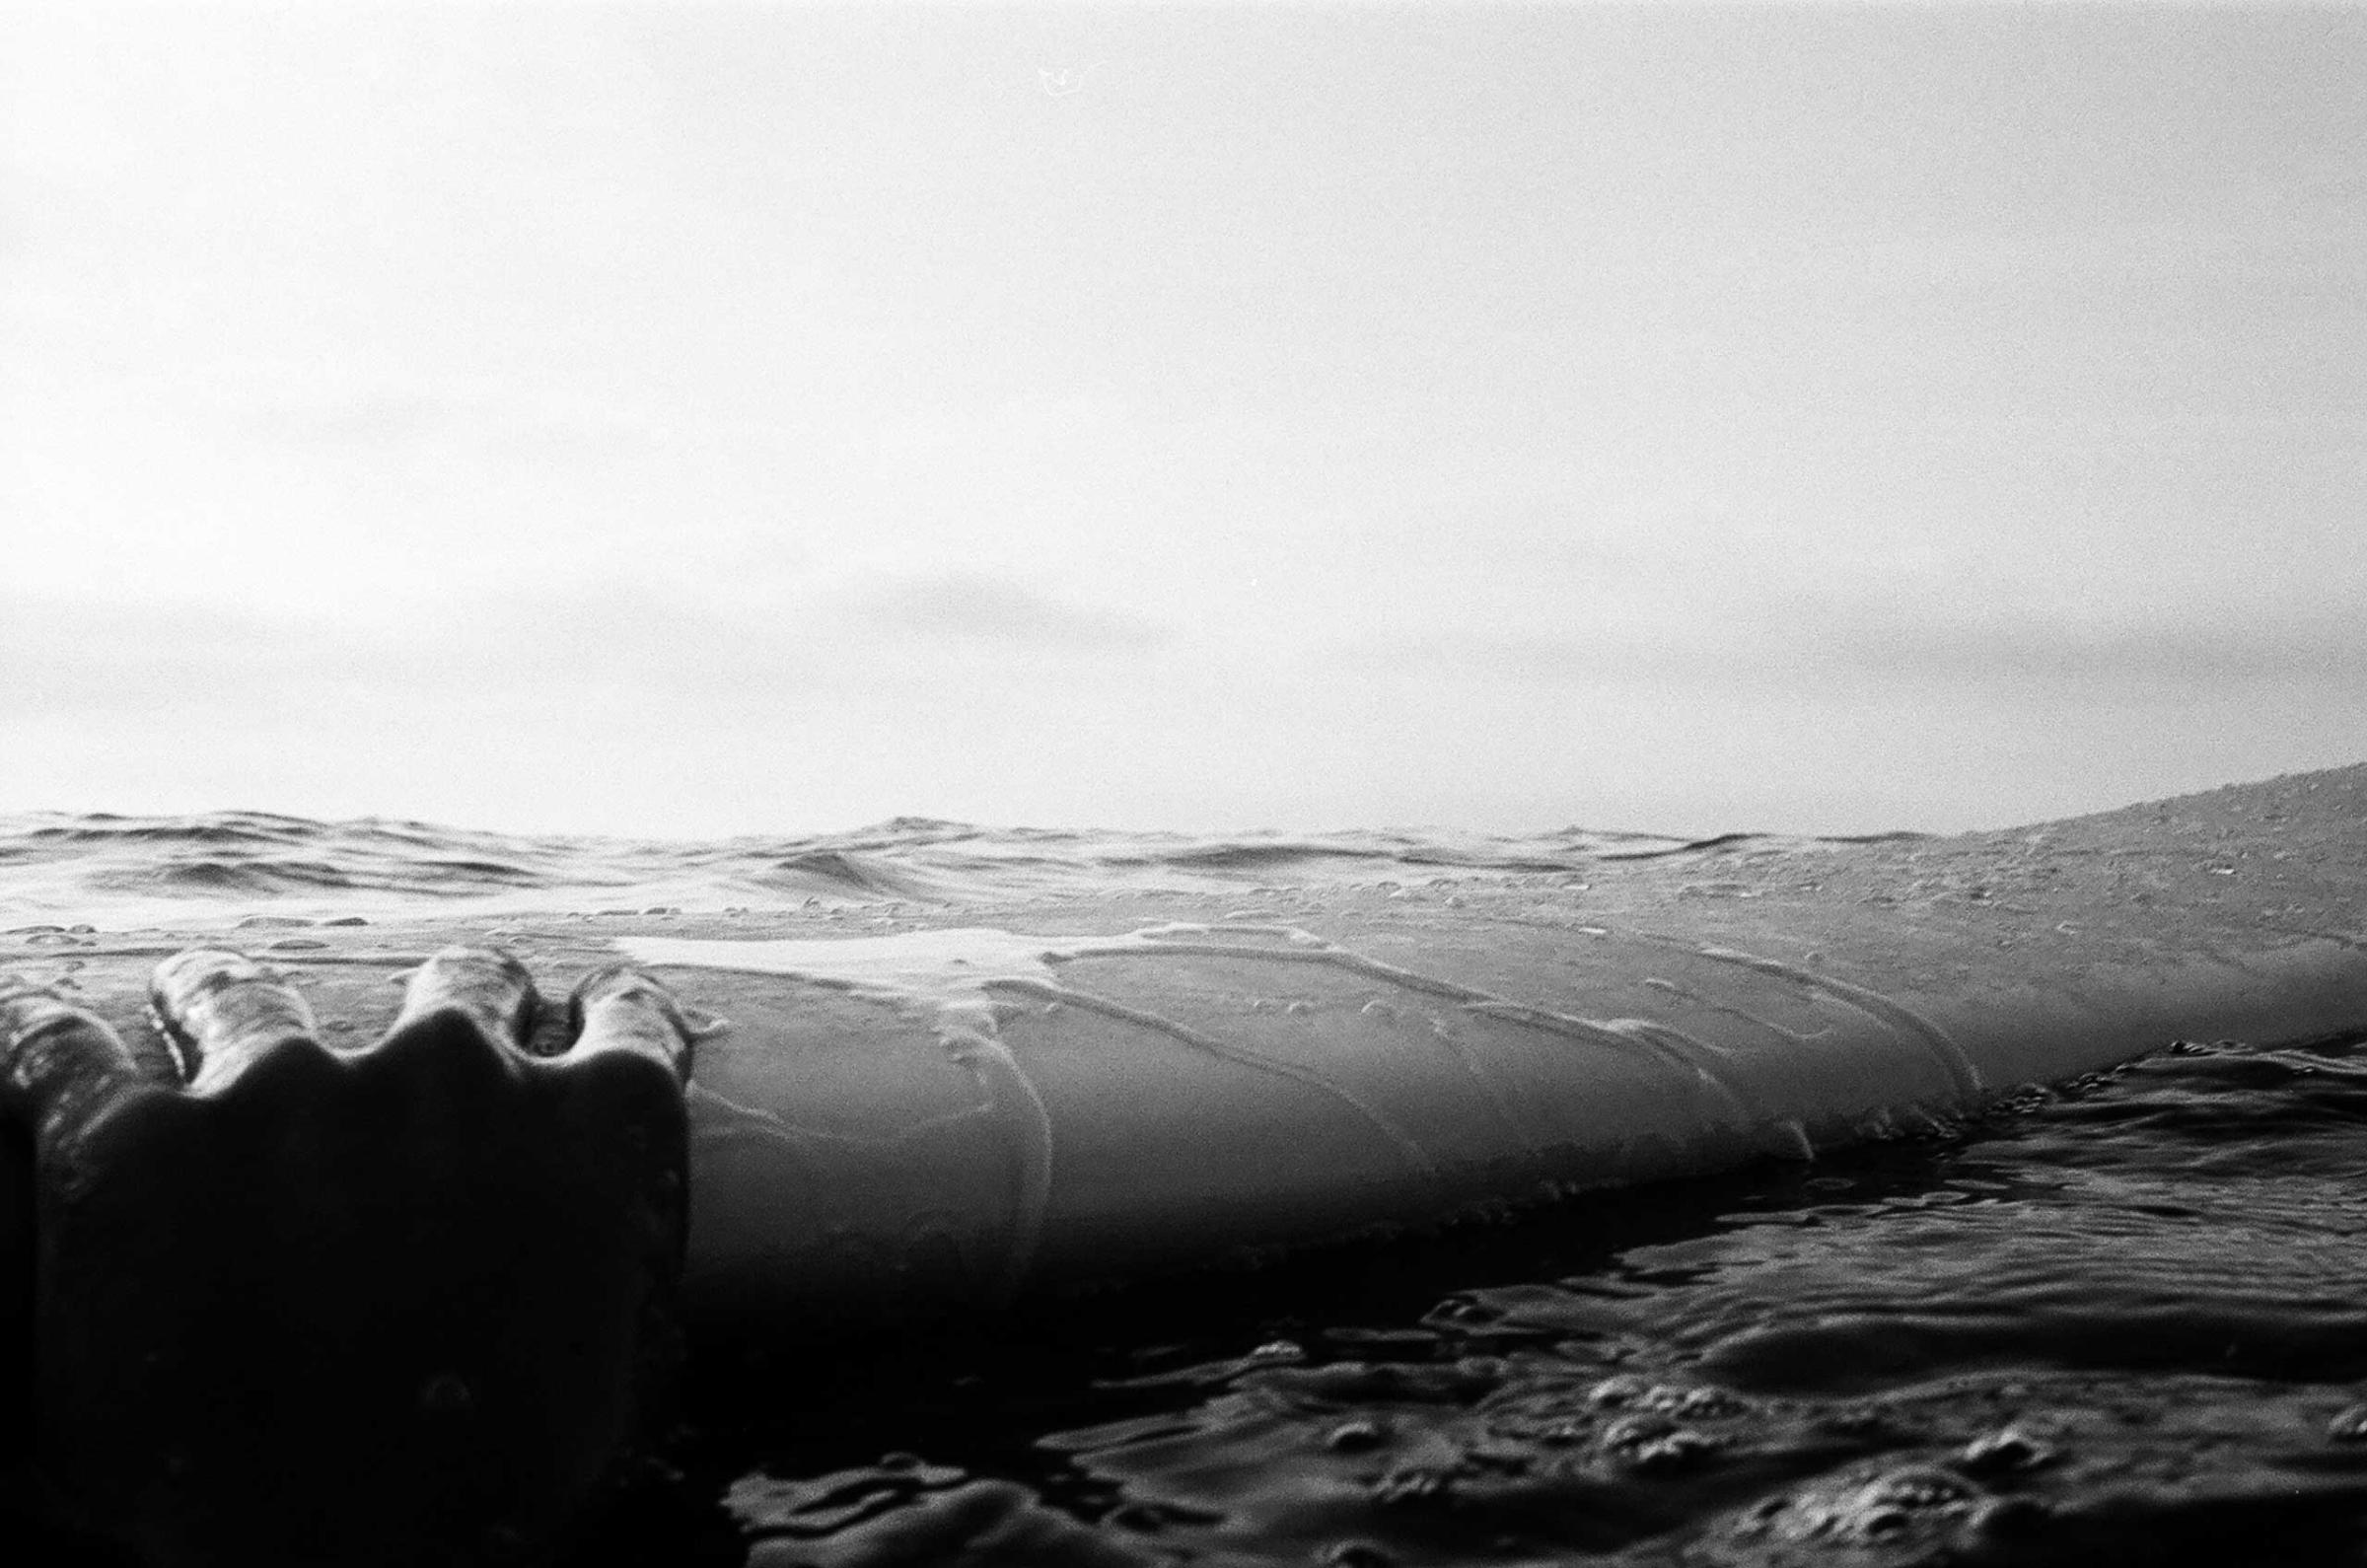 Mar Cubillos holds on to a surfboard by Rockaway beach, N.Y. in Aug. 2014